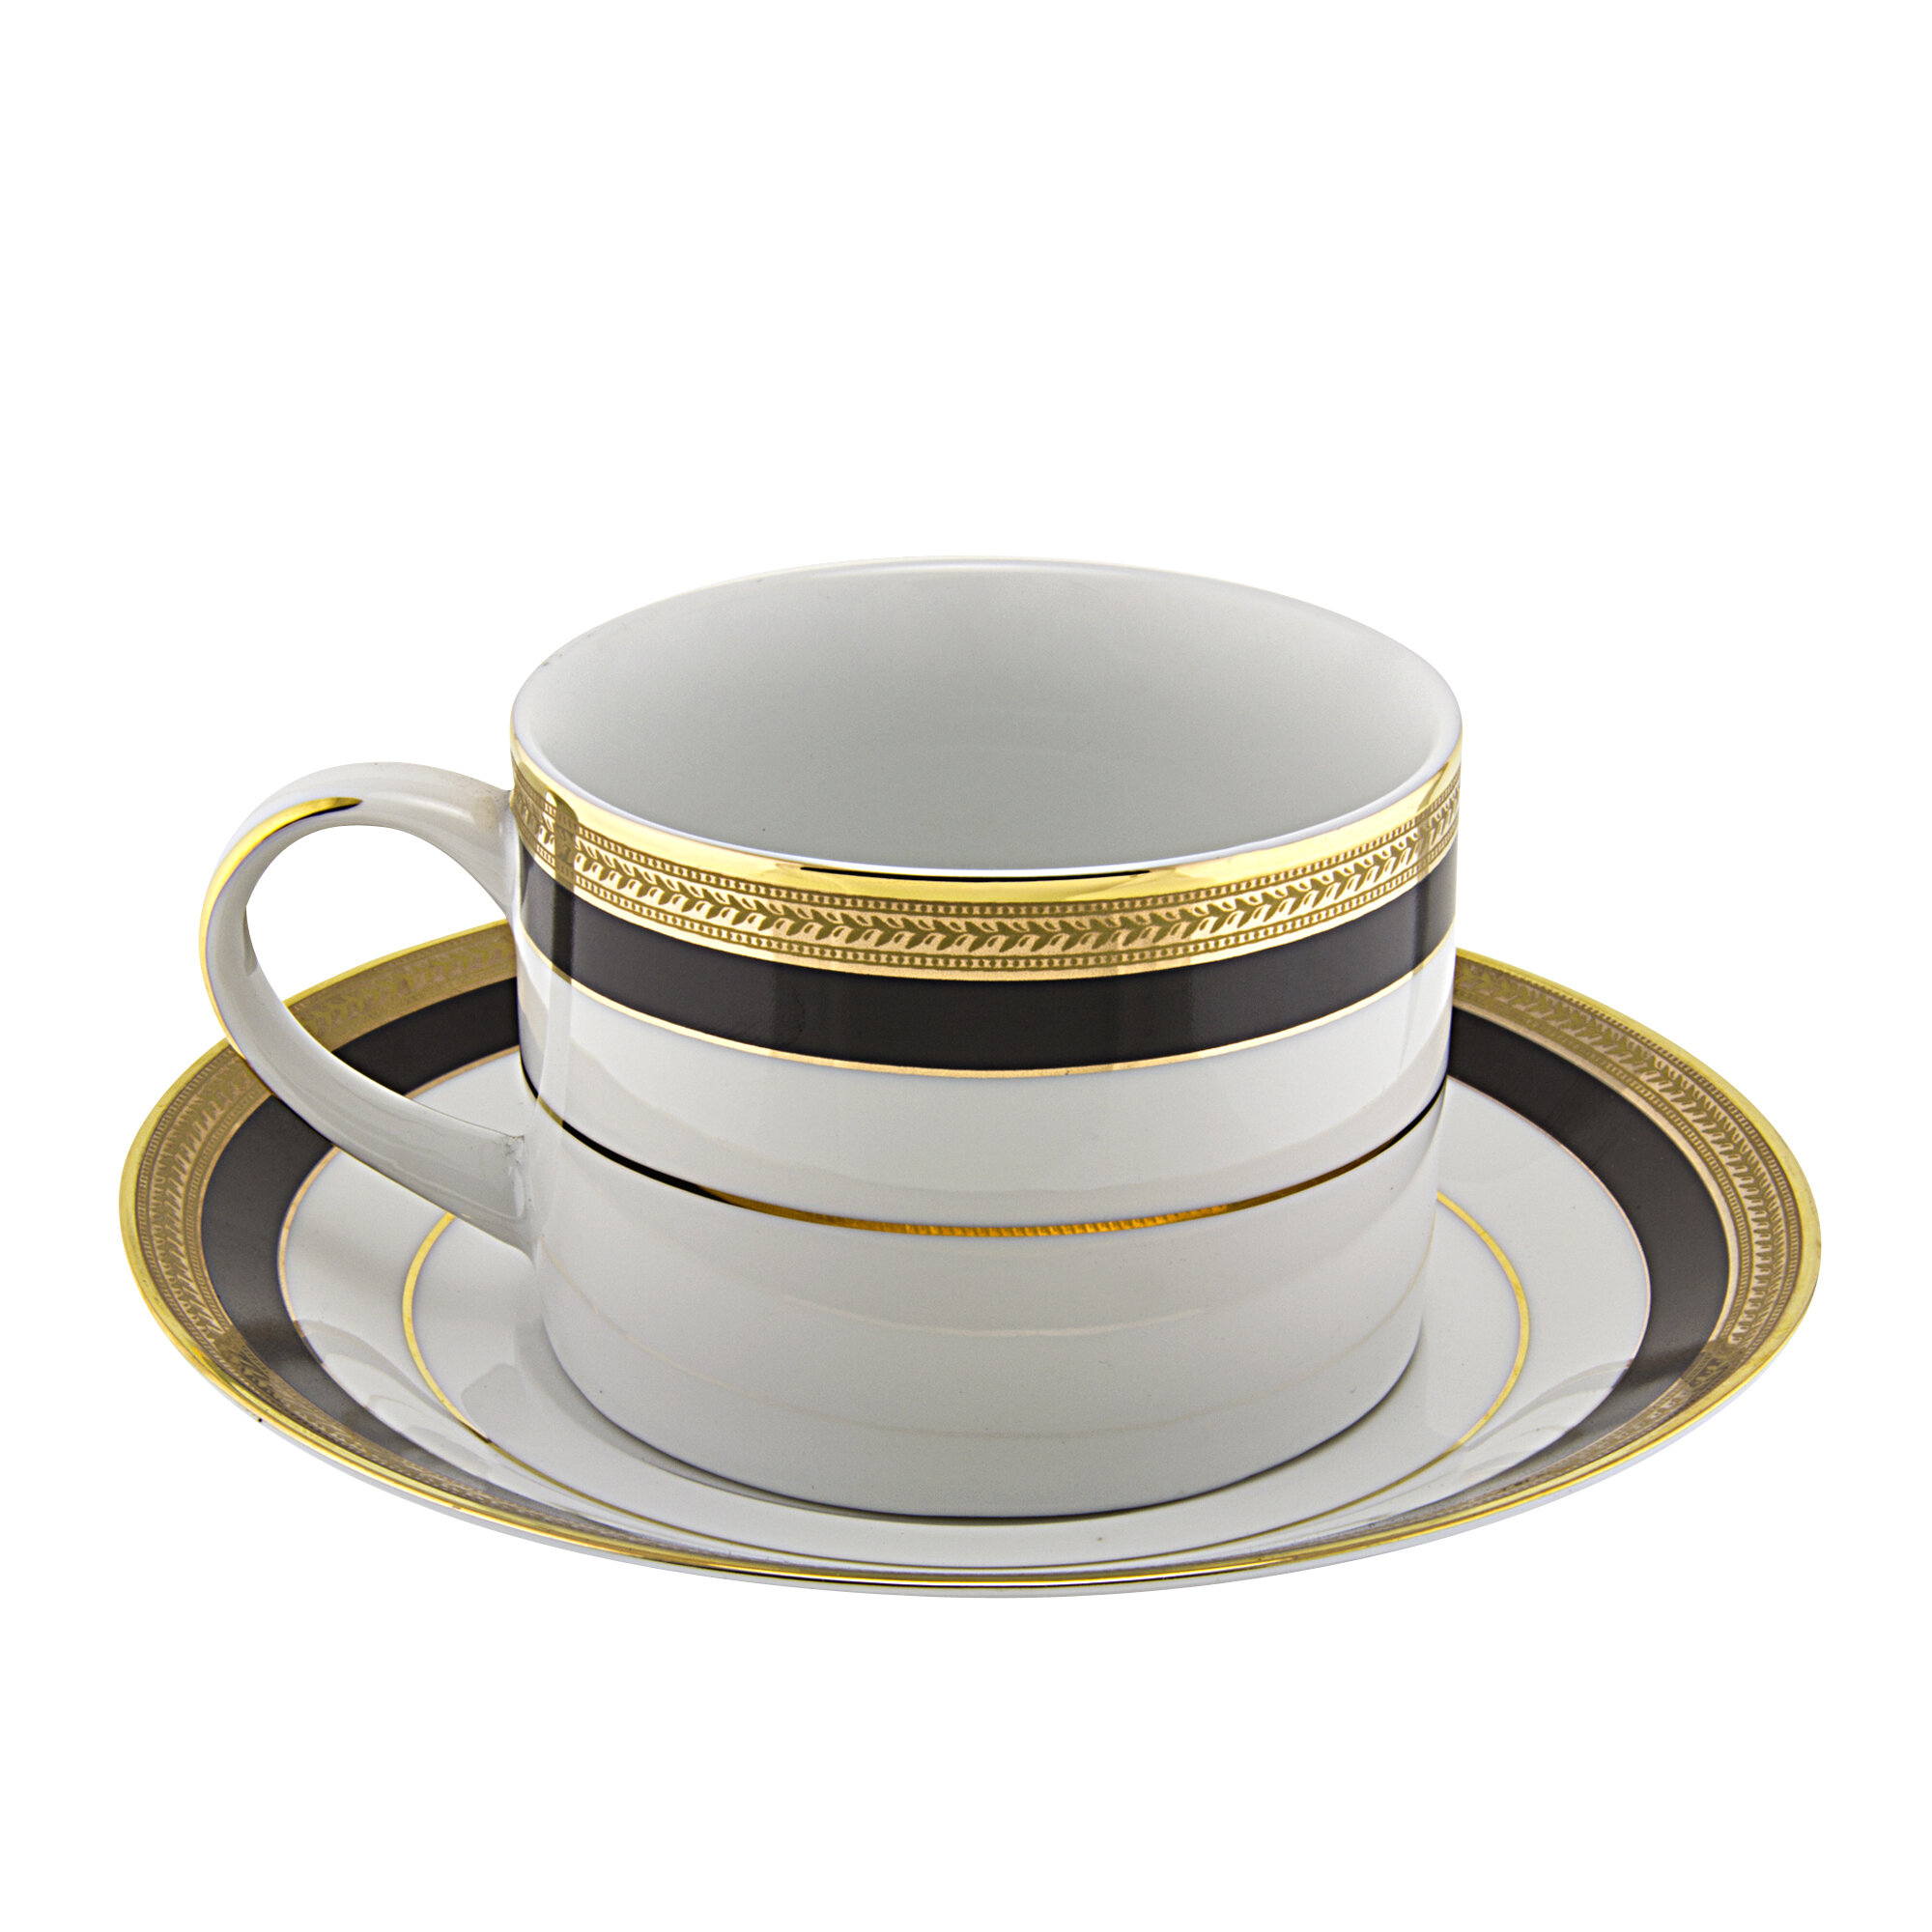 Verge Espresso Cup and Saucer + Reviews